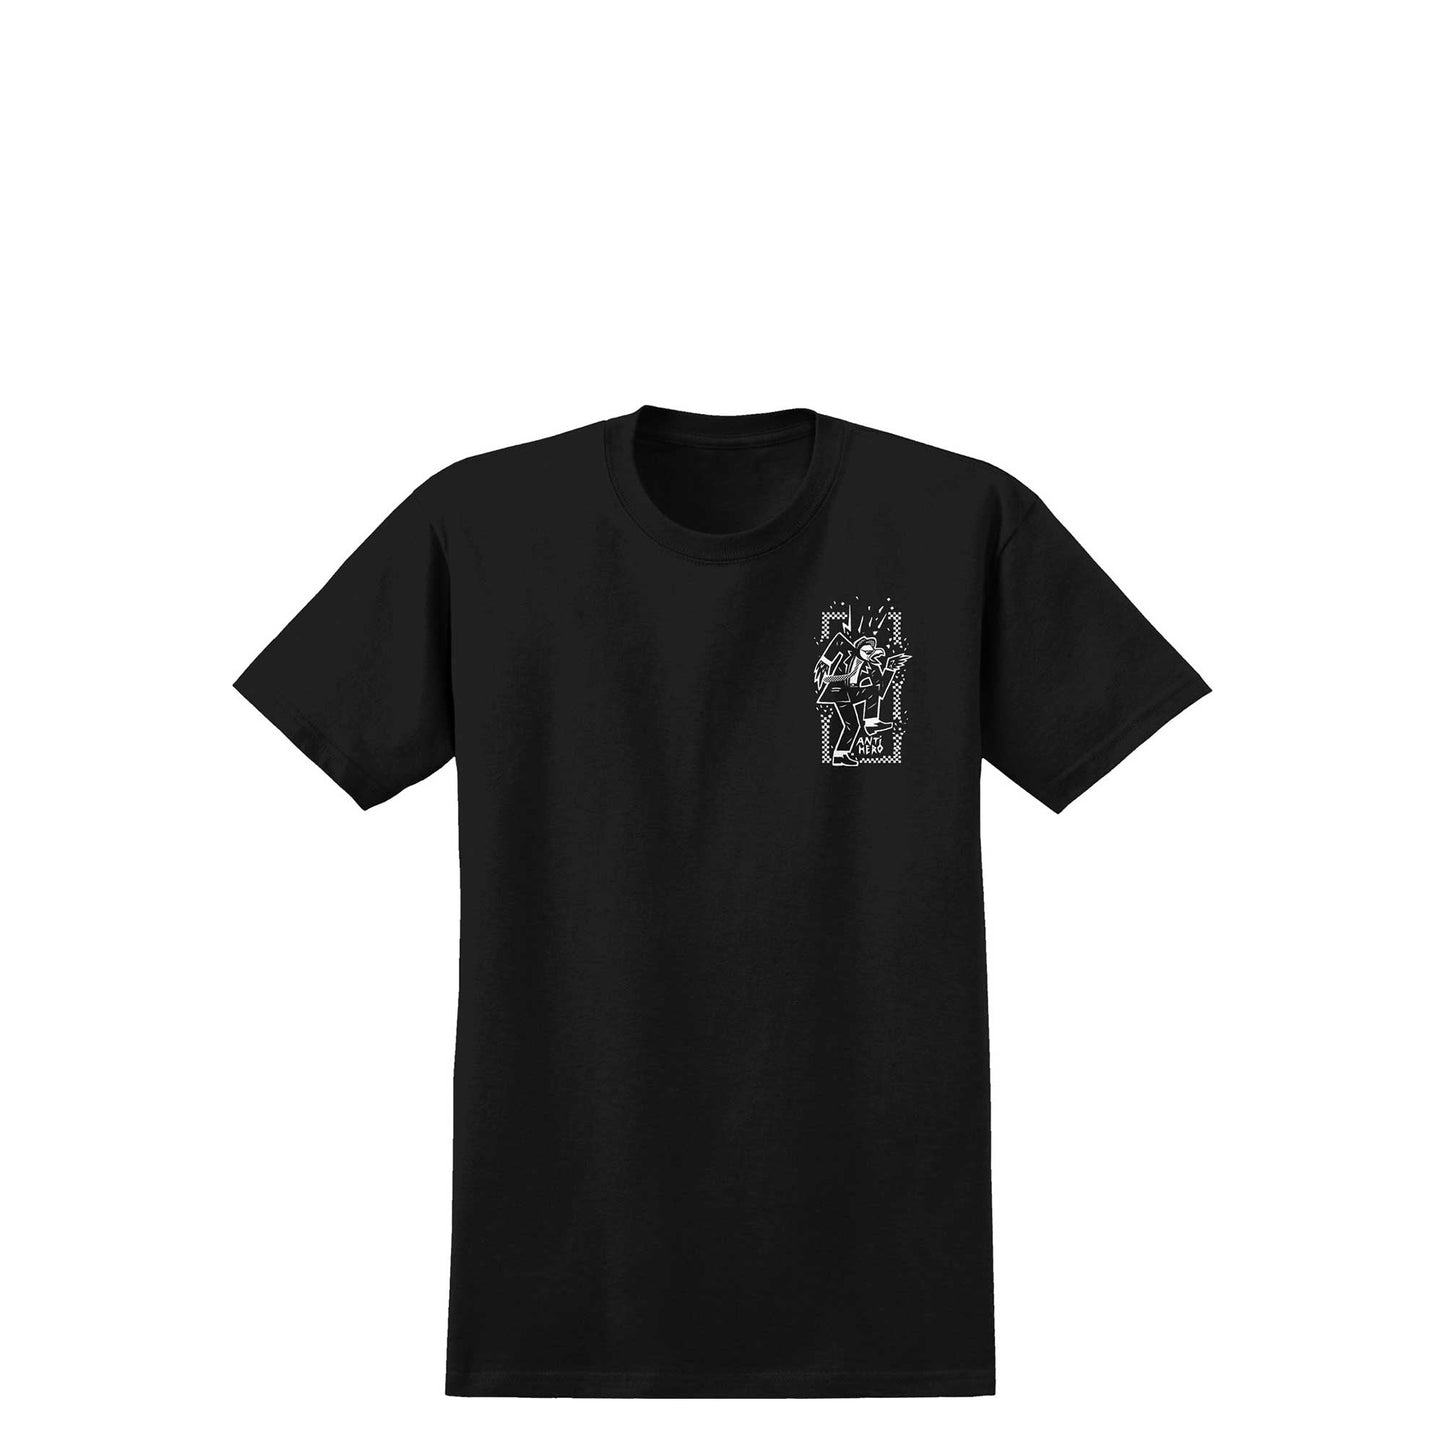 Anti Hero Rude Bwoy T-Shirt, black w white prints - Tiki Room Skateboards - 2